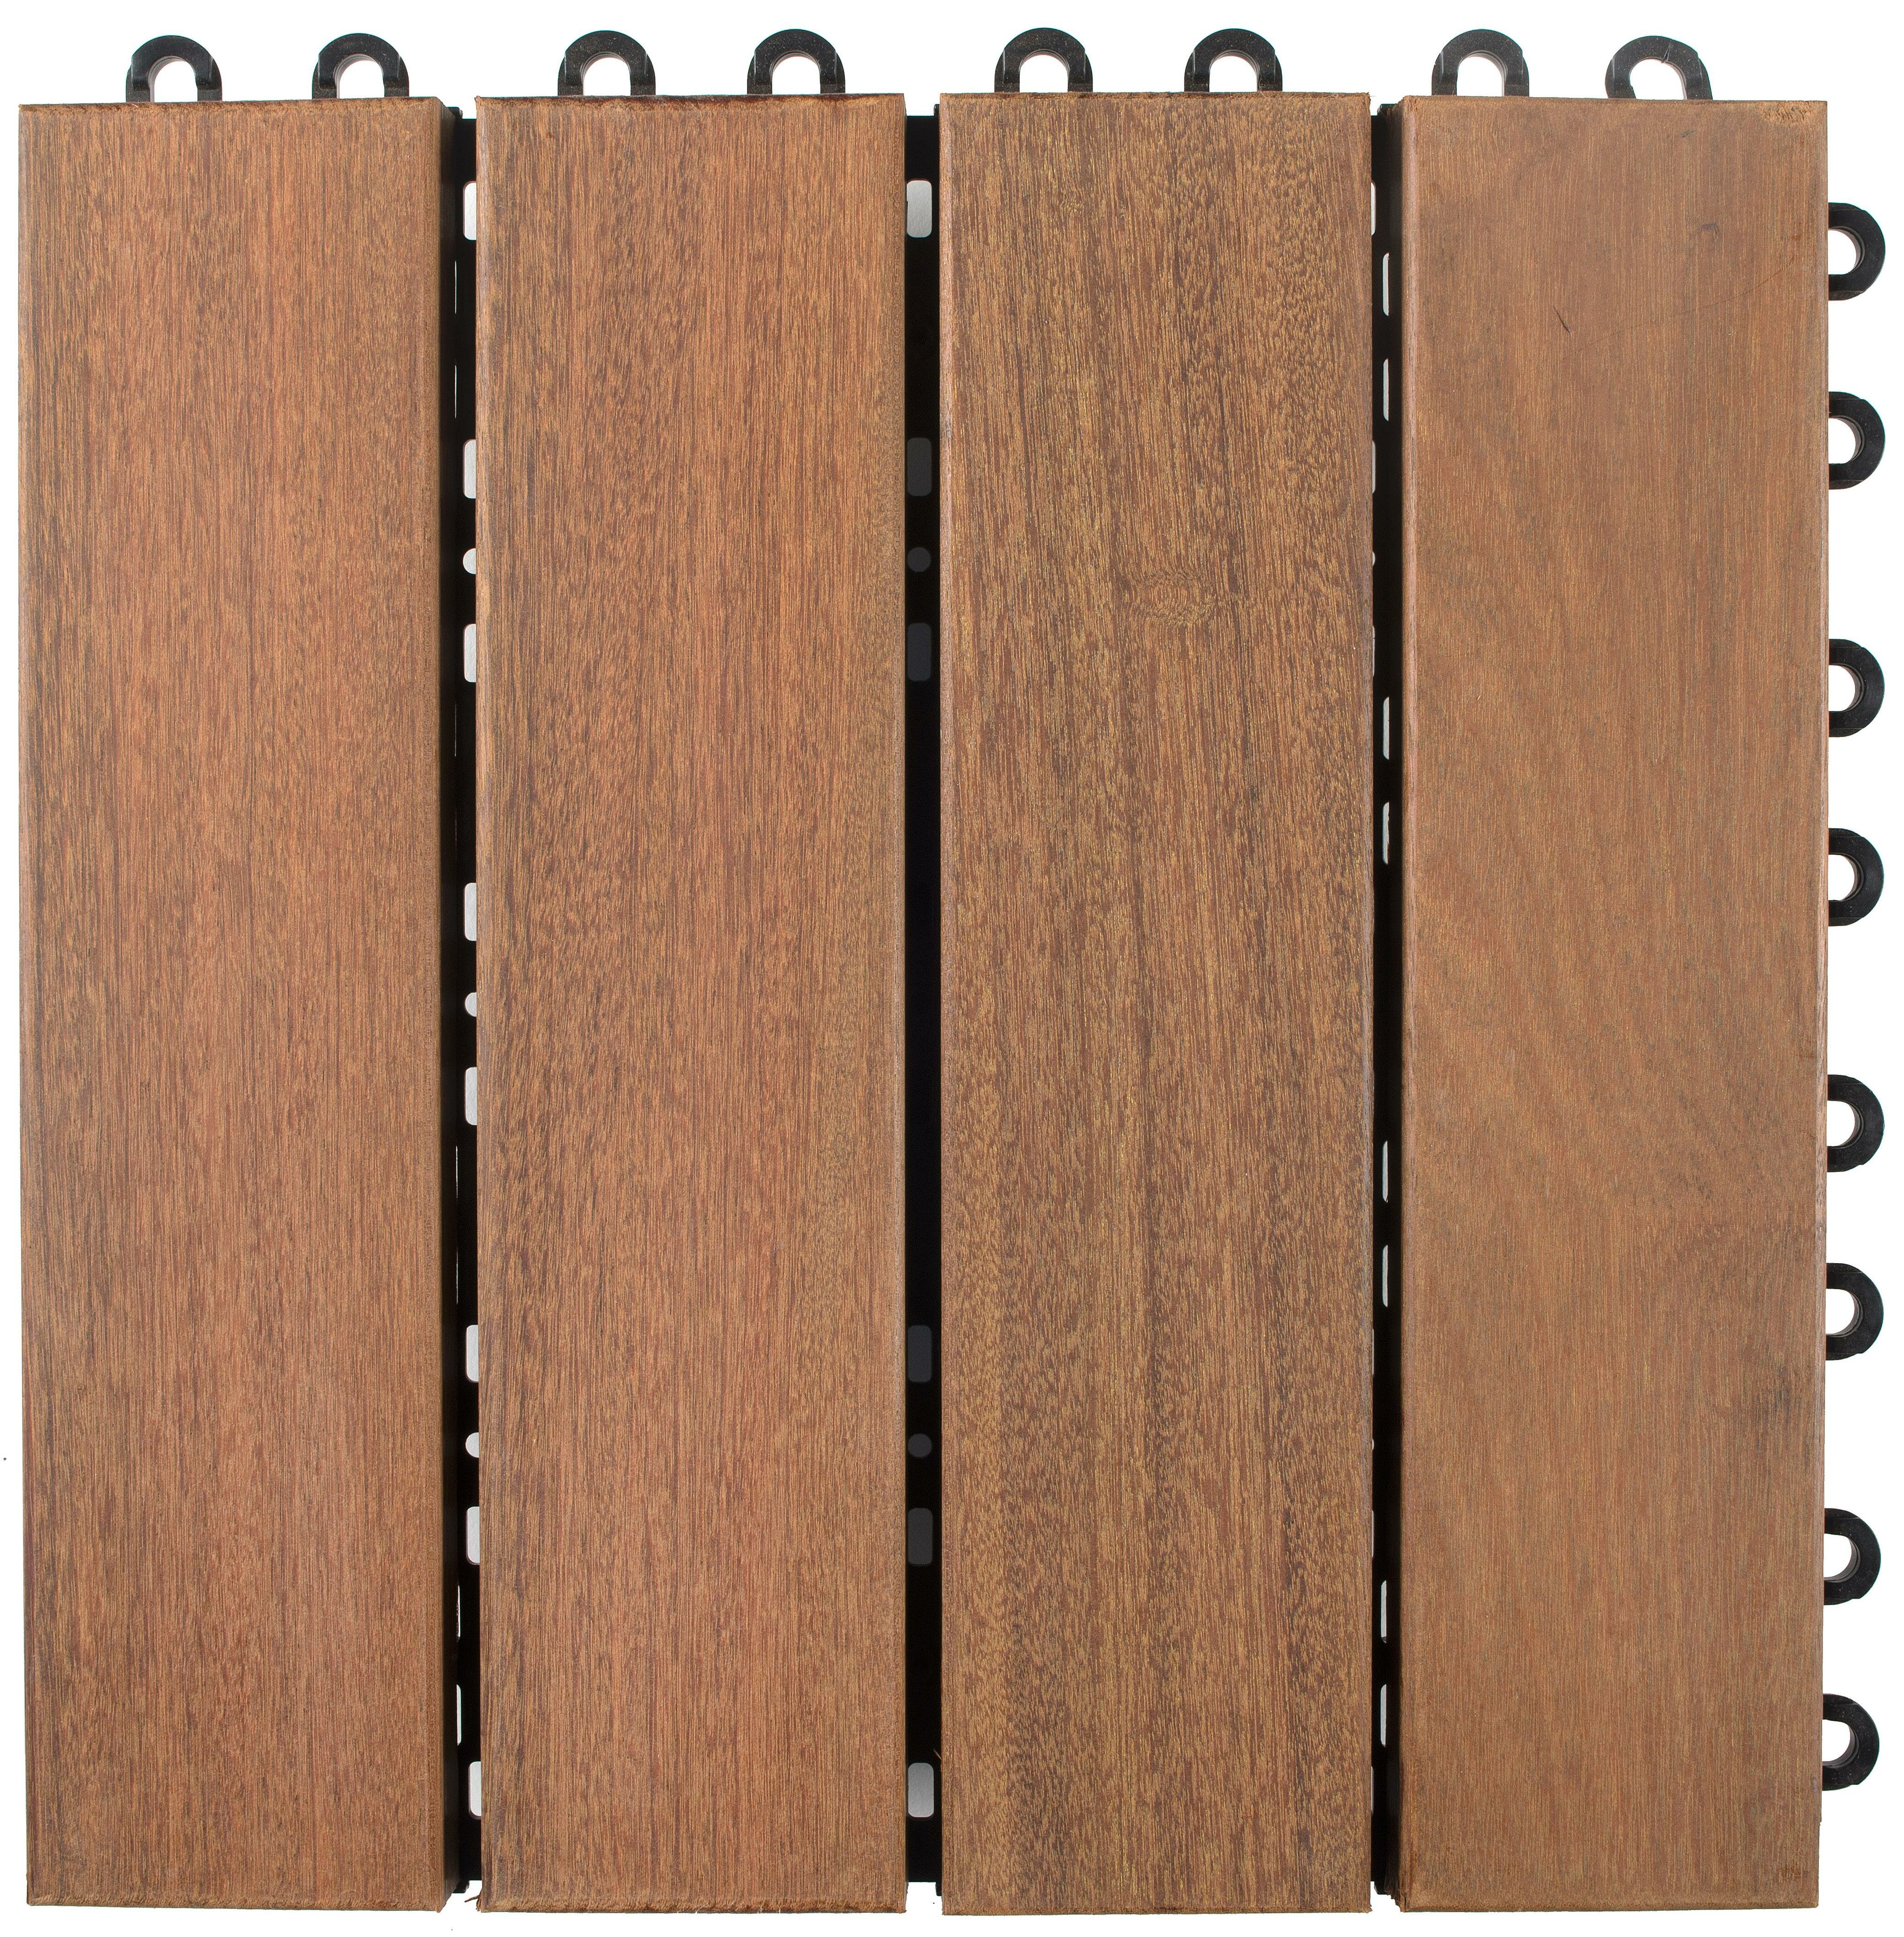 Outdoor Decking Tiles | Snap Together Deck Tiles | Ipe Deck Tiles